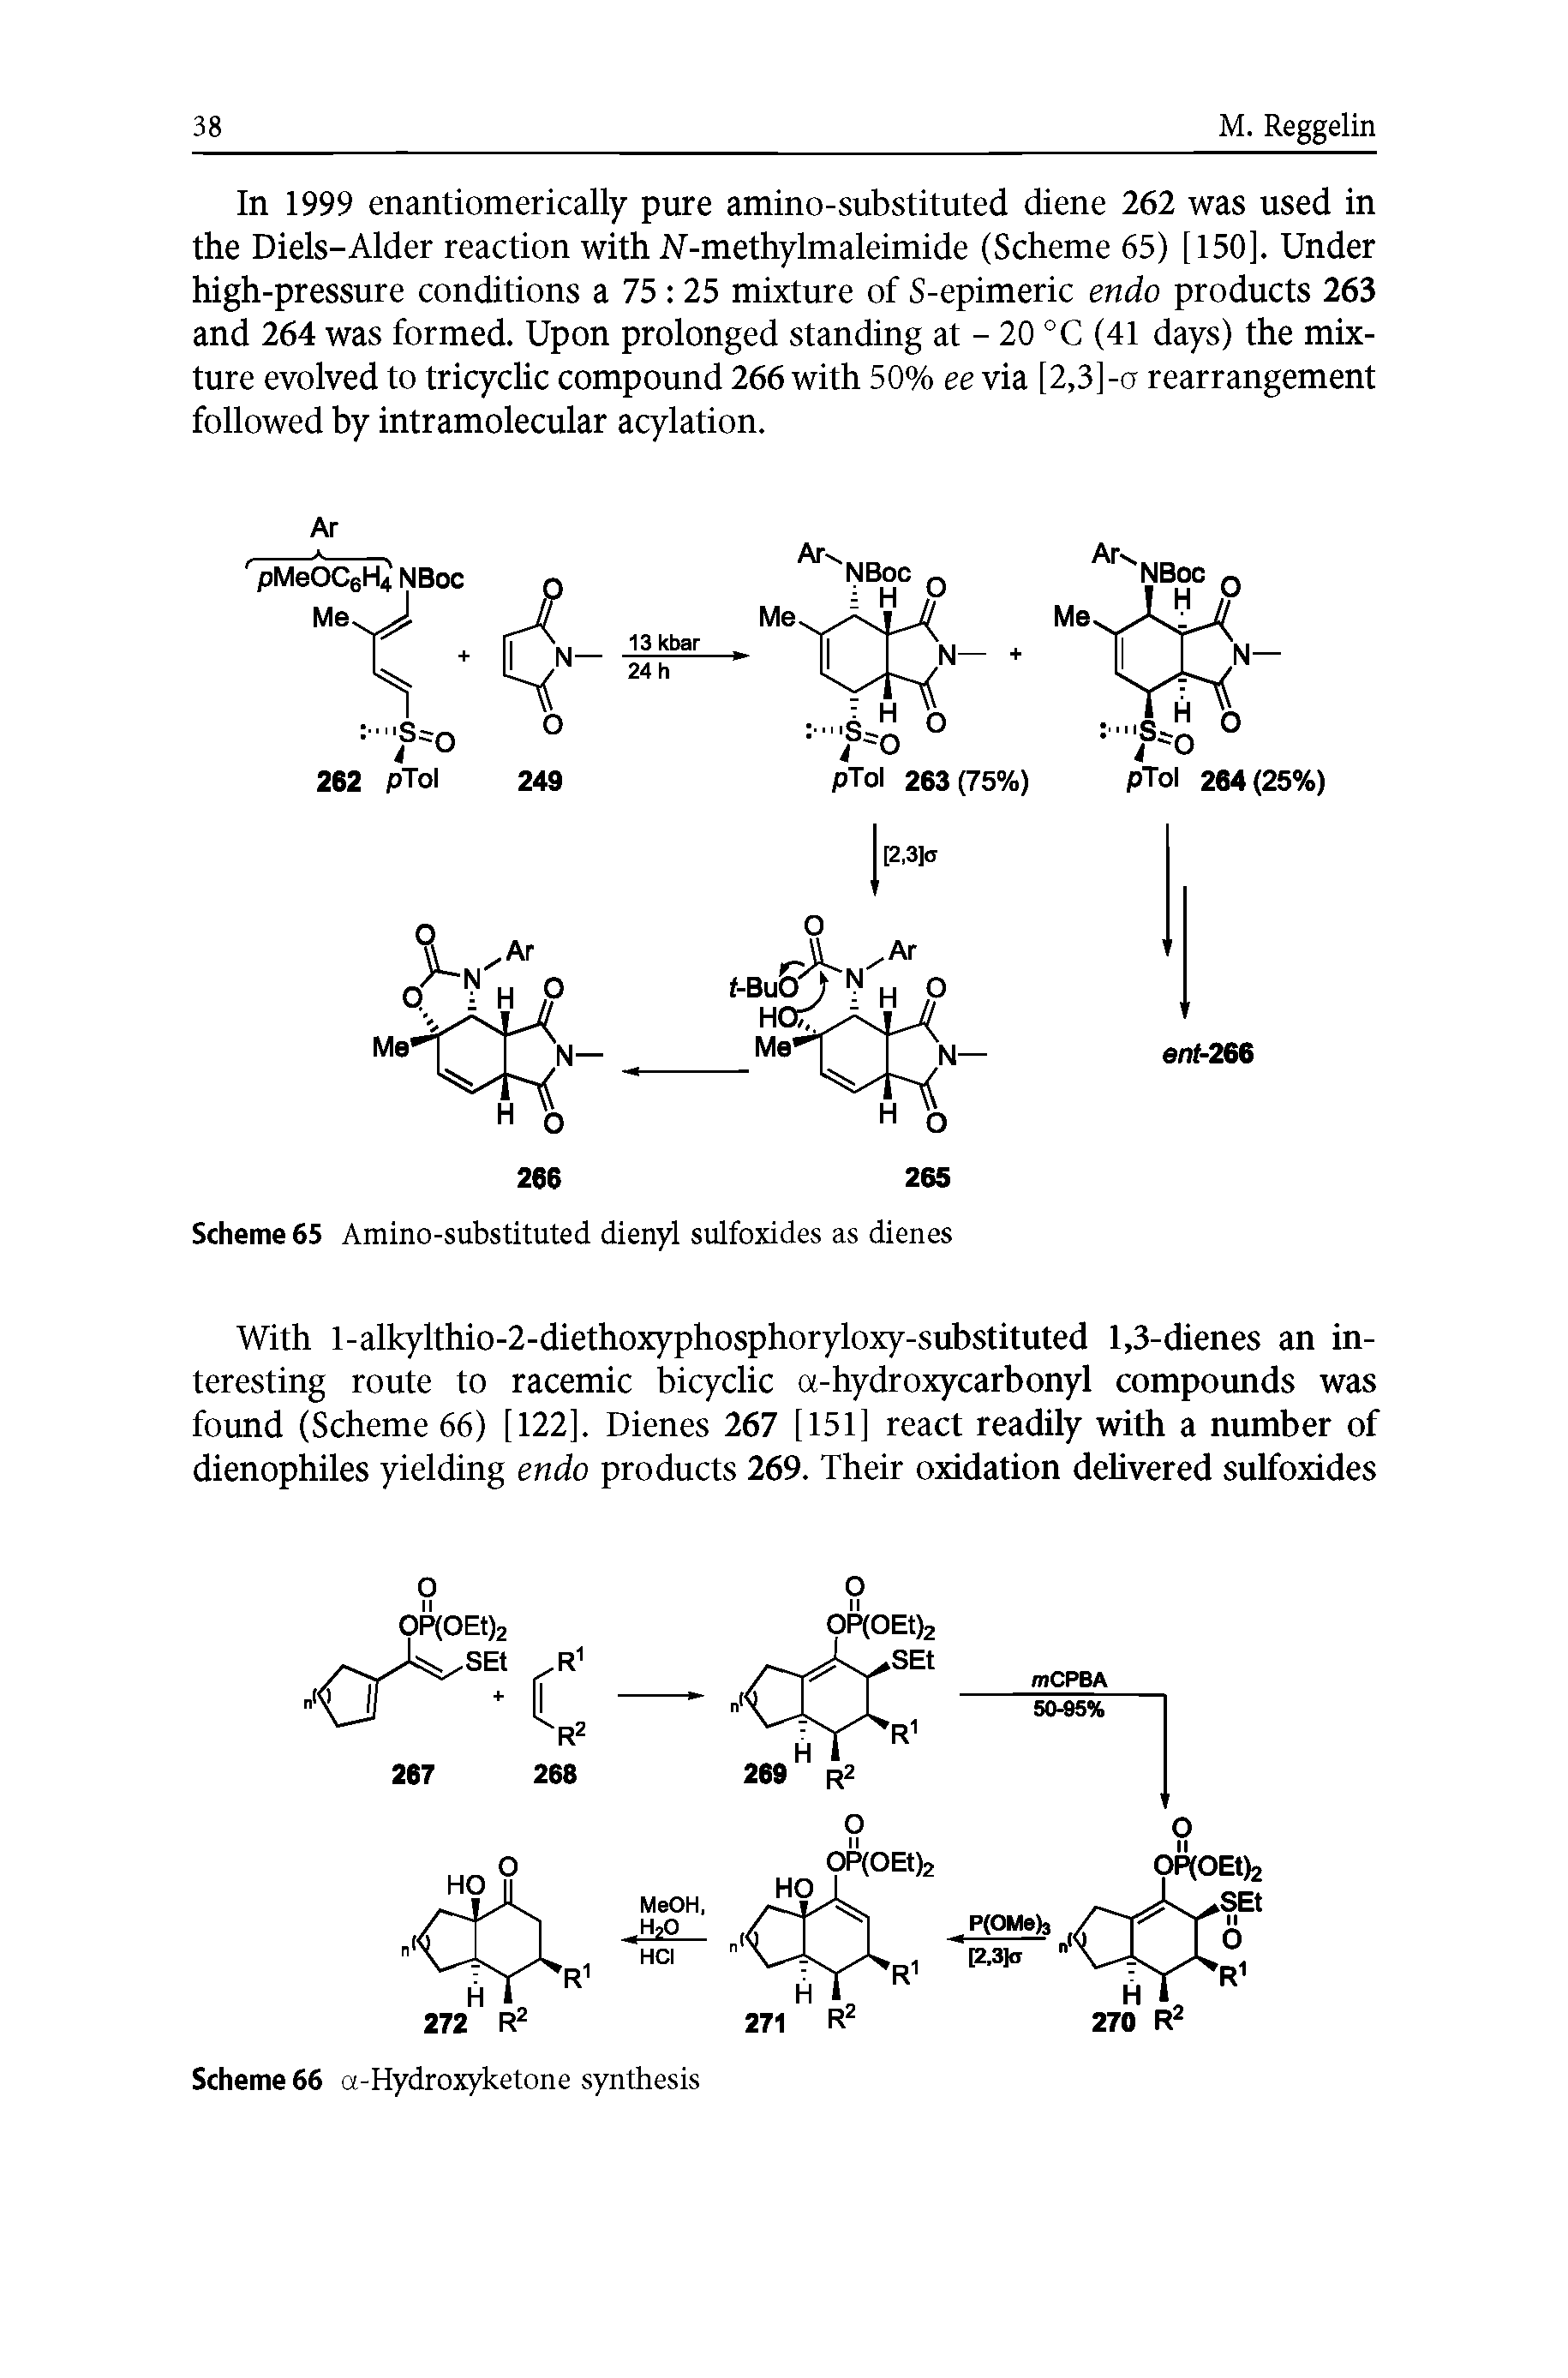 Scheme 65 Amino-substituted dienyl sulfoxides as dienes...